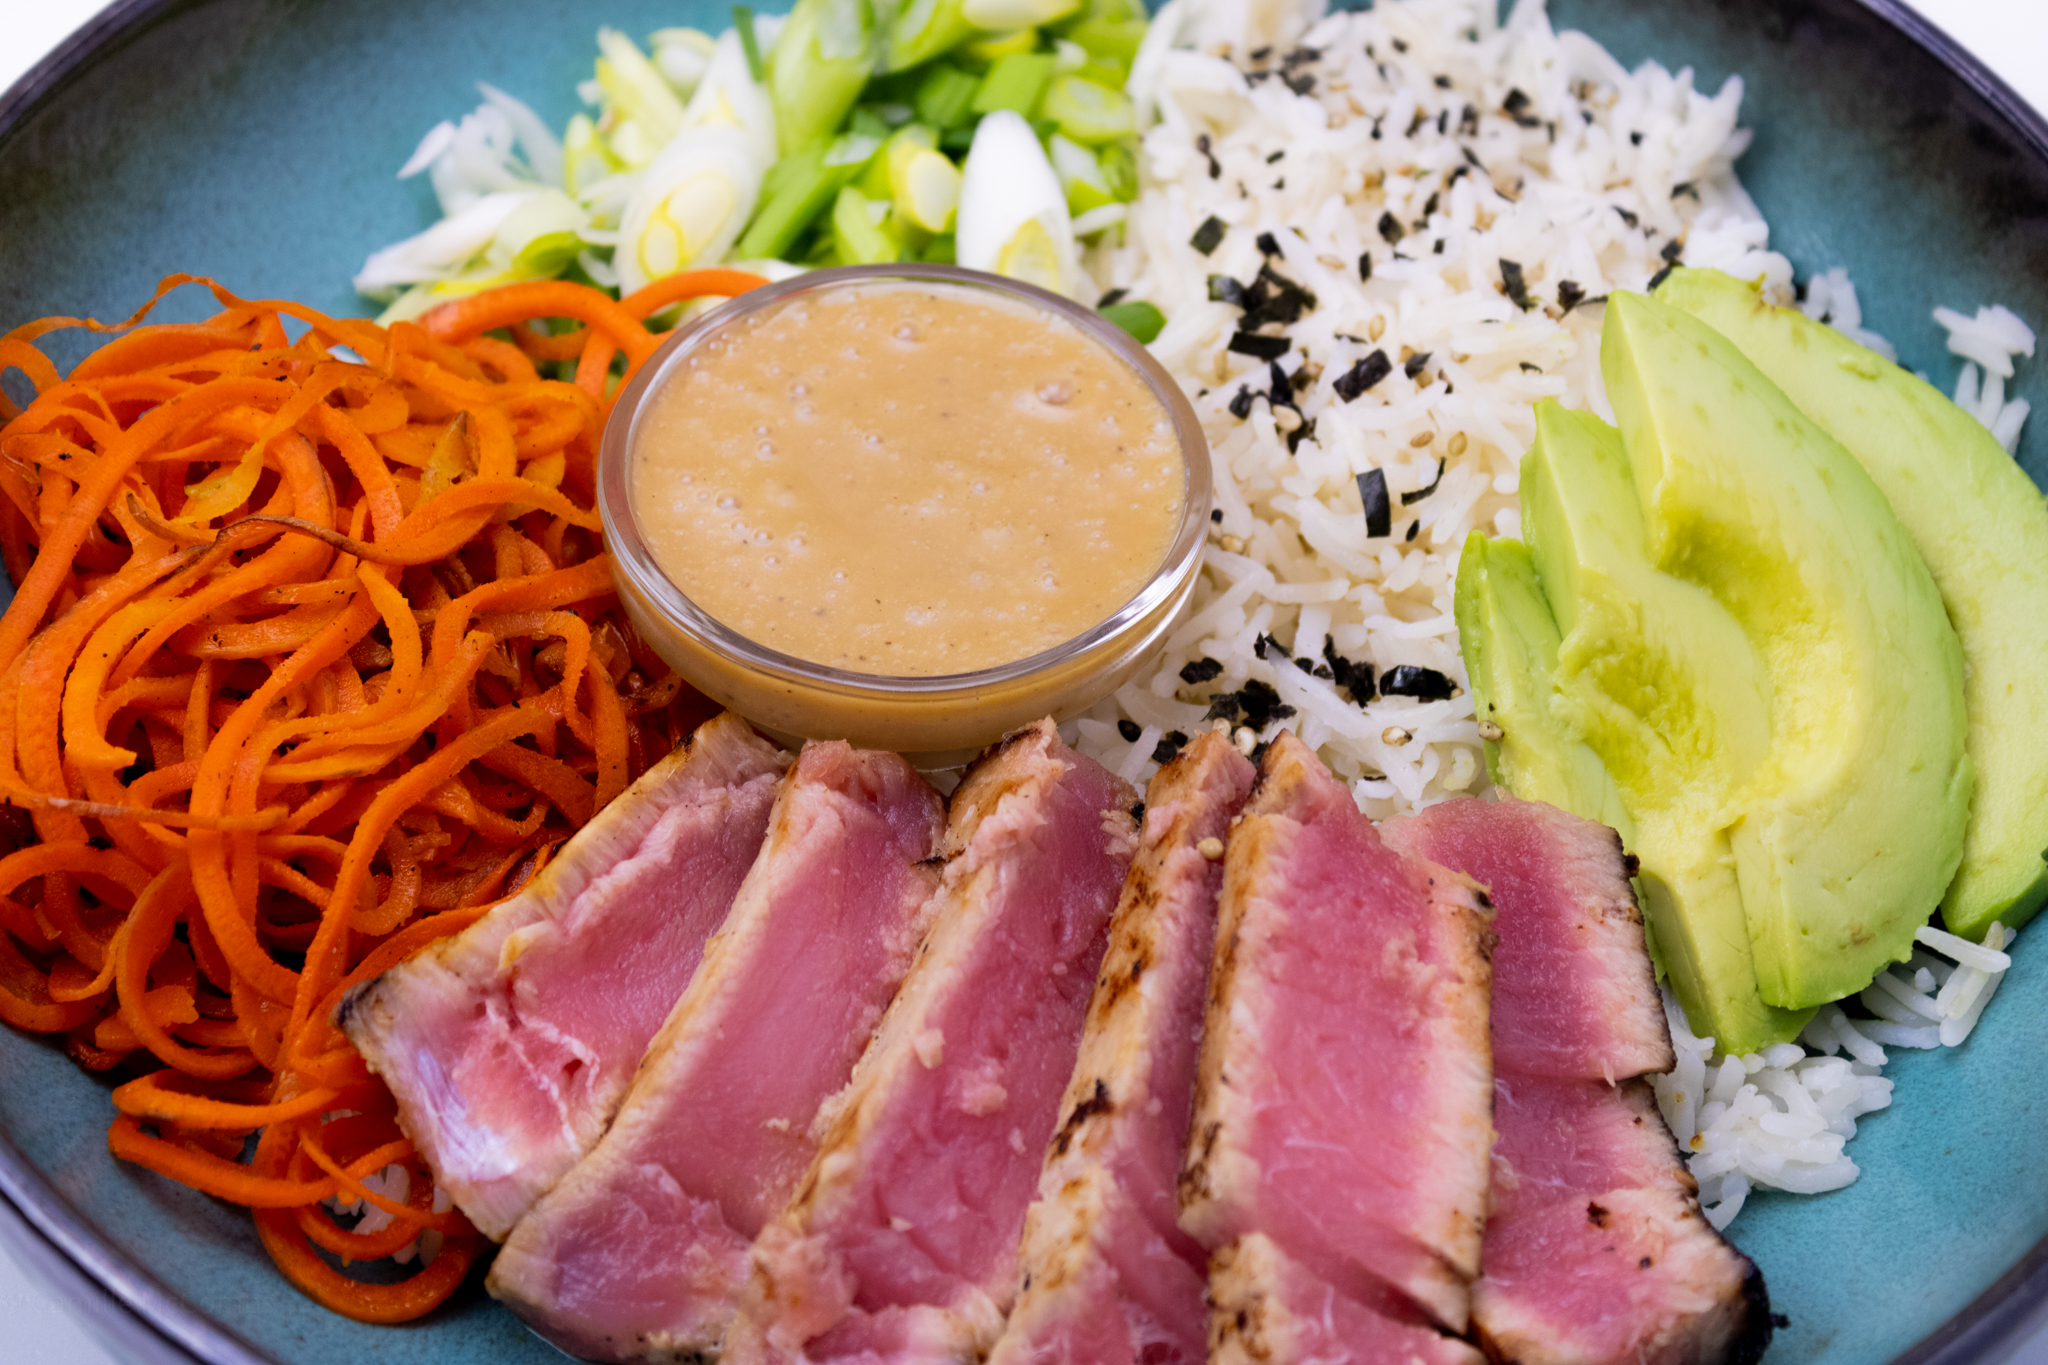 Seared Tuna Steak with rice and veggies